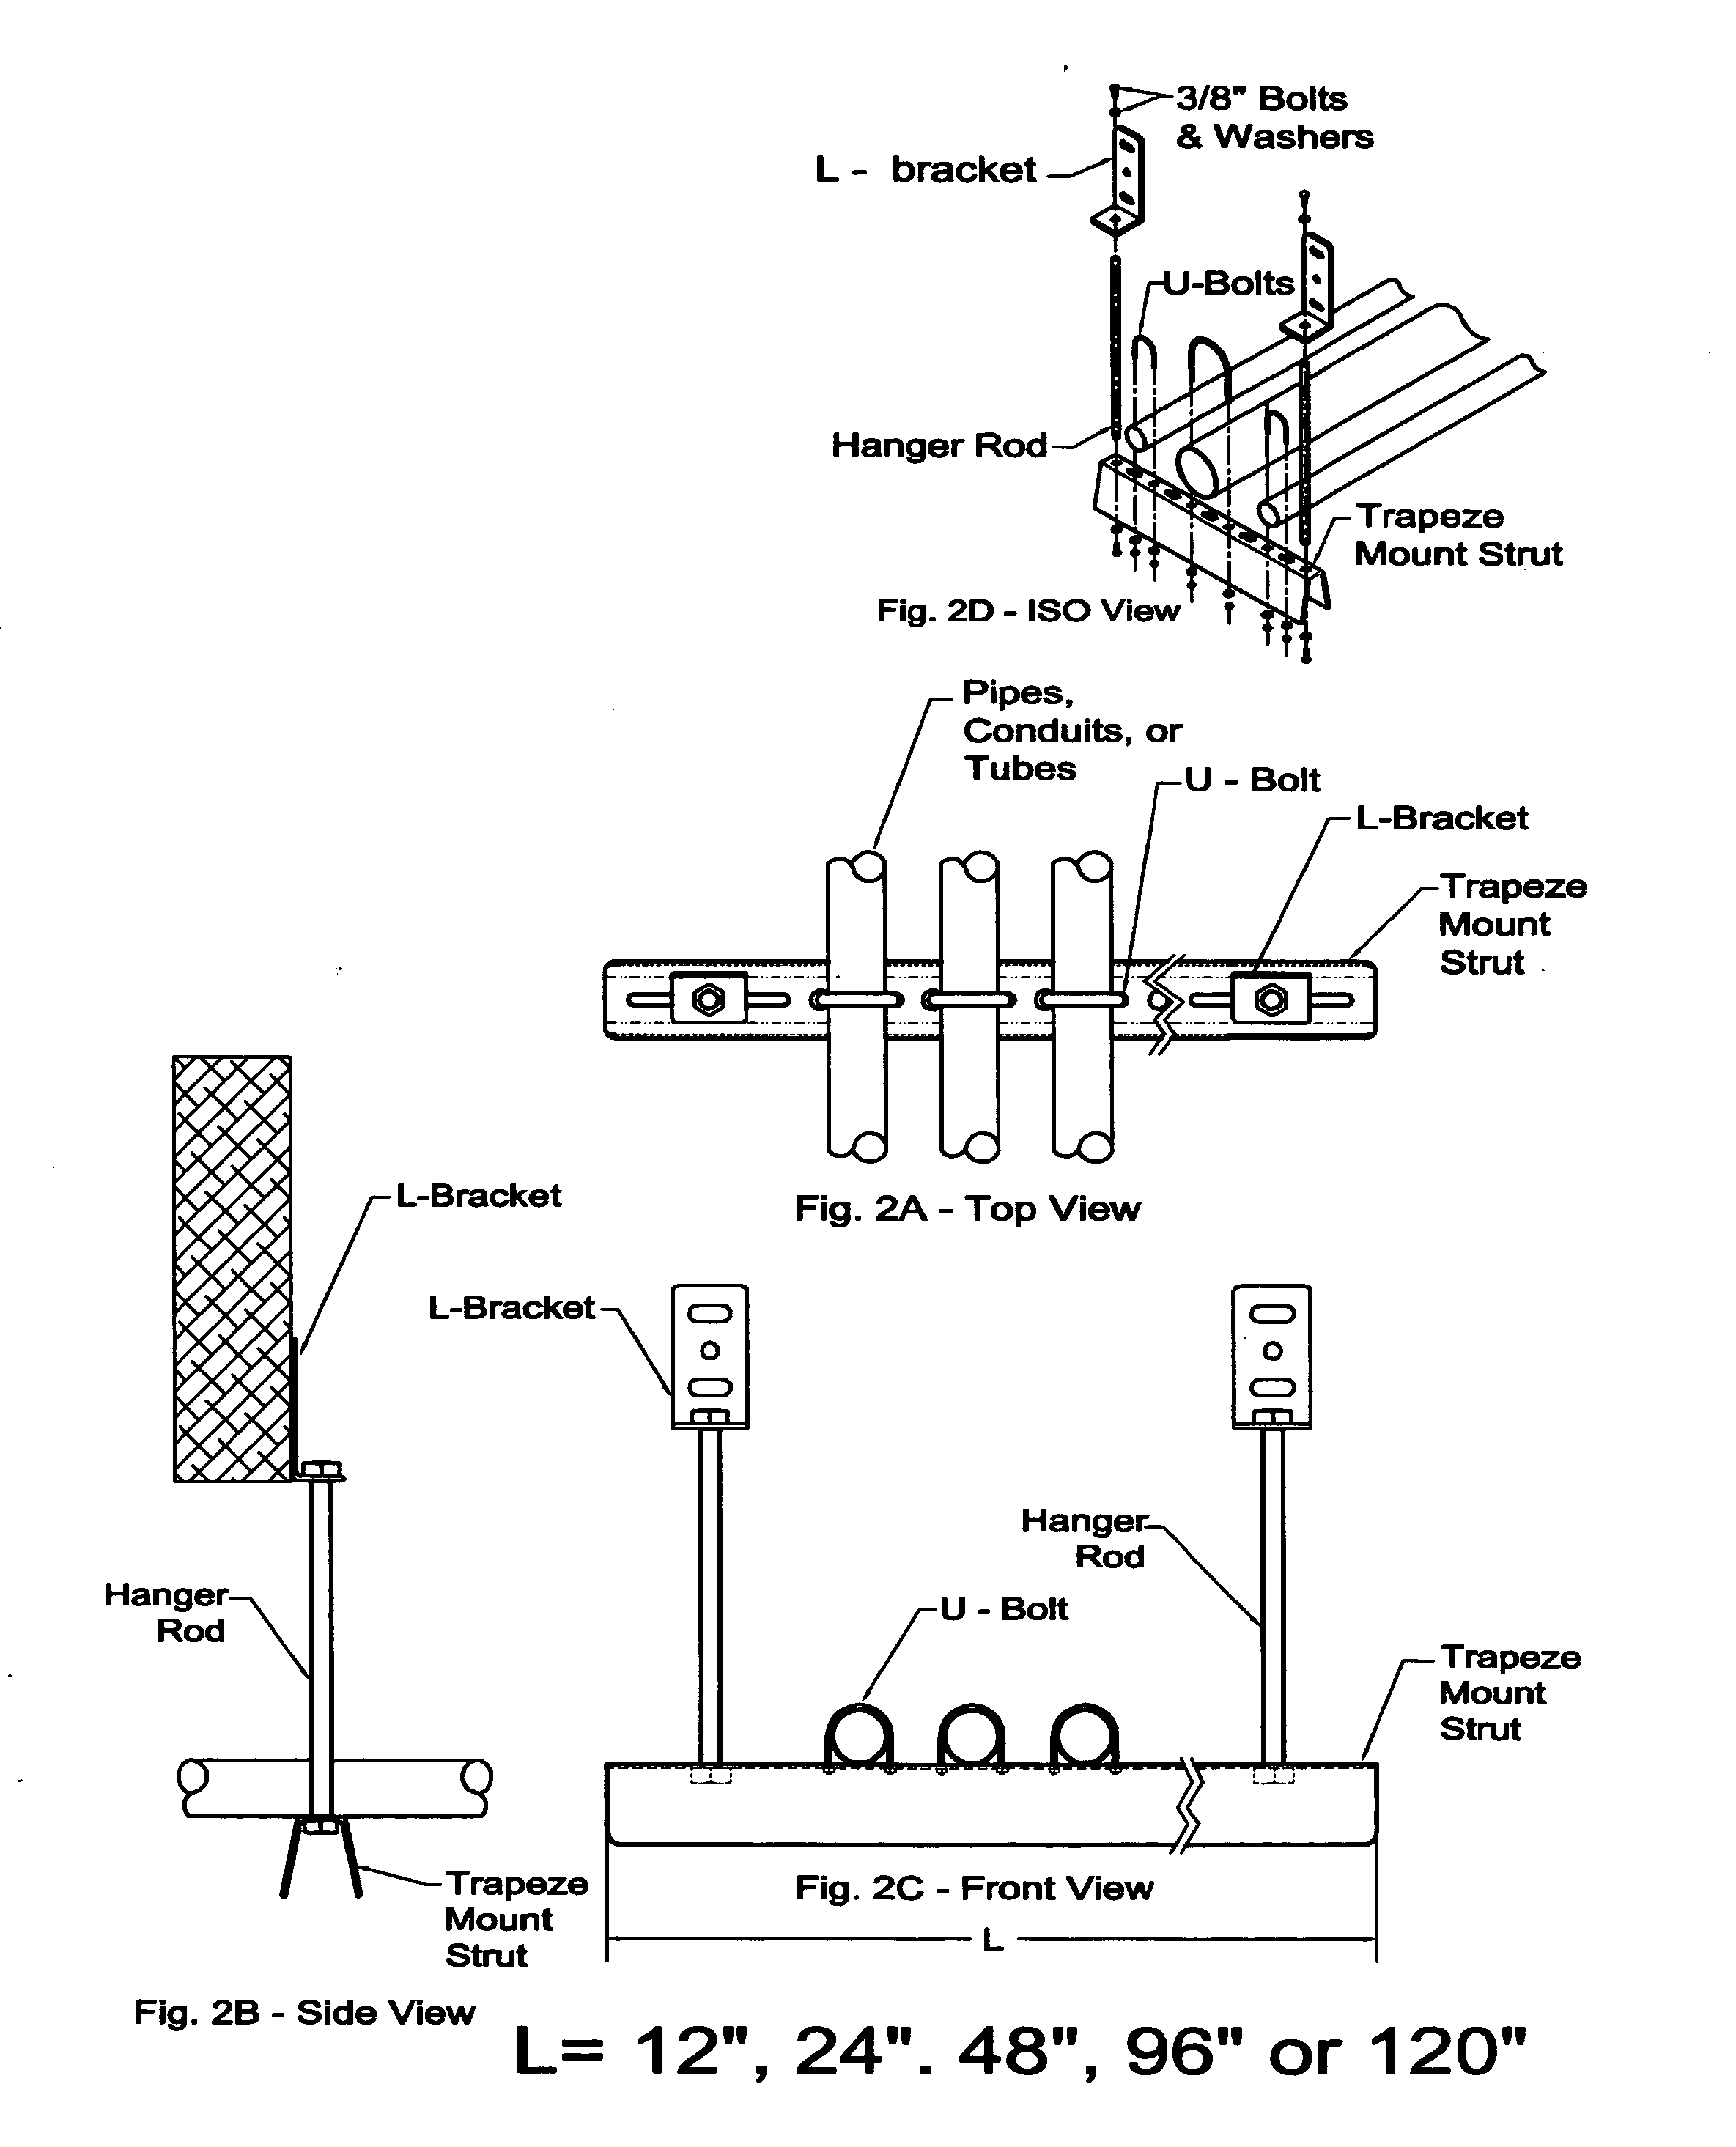 Sanitary pipe mounting system